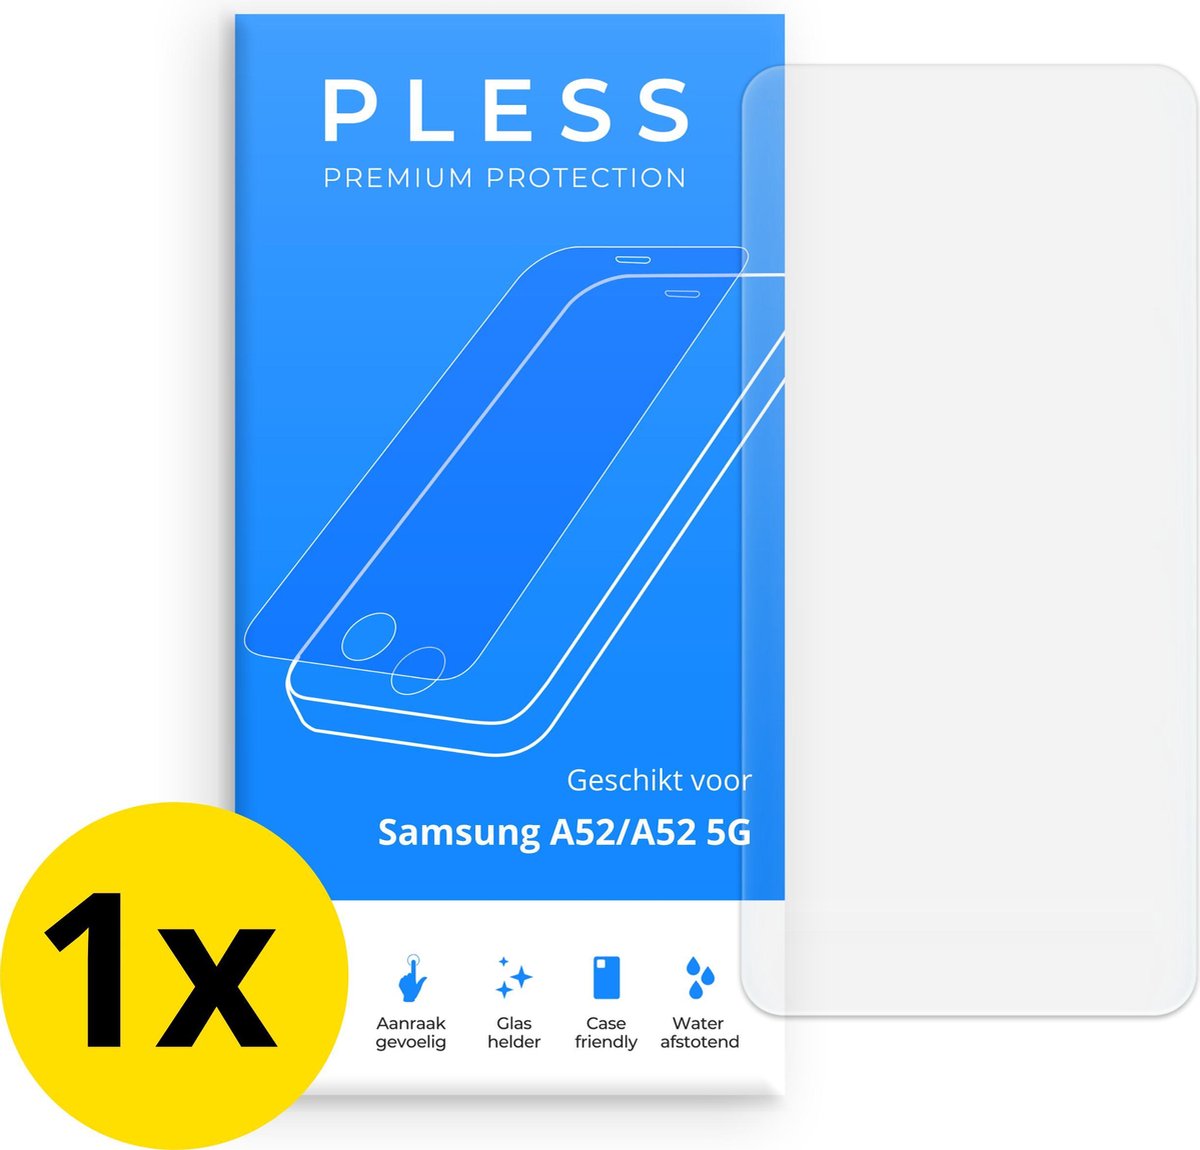 Samsung A52 Screenprotector 1x - Beschermglas Tempered Glass Cover - Pless®